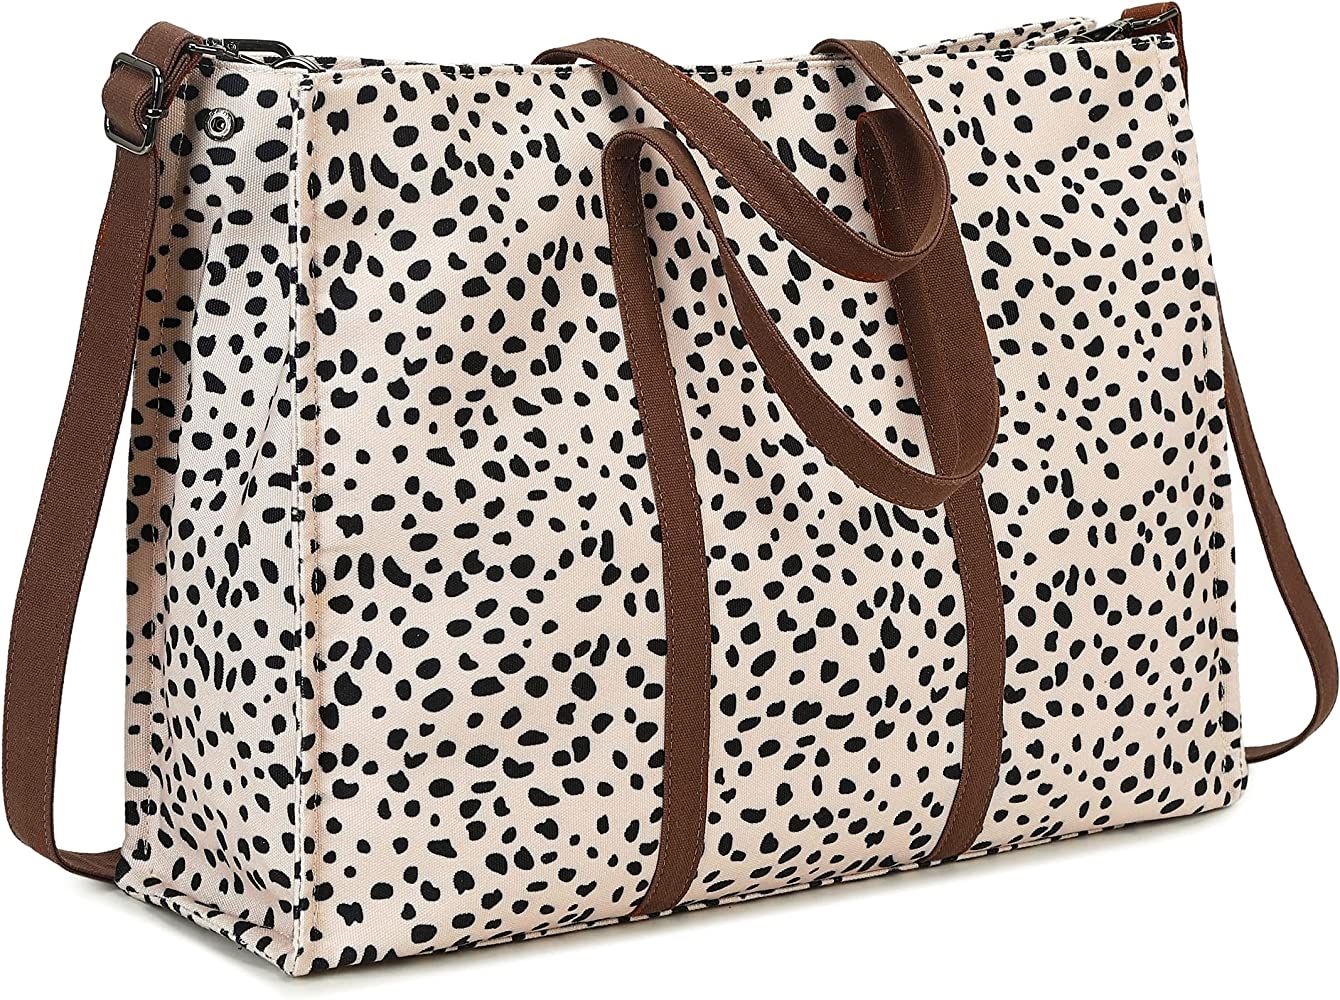 Laptop Tote Bag for Women Work 15.6 inch Canvas Shoulder Bags Computer Messenger Purse Teacher Handb | Amazon (US)